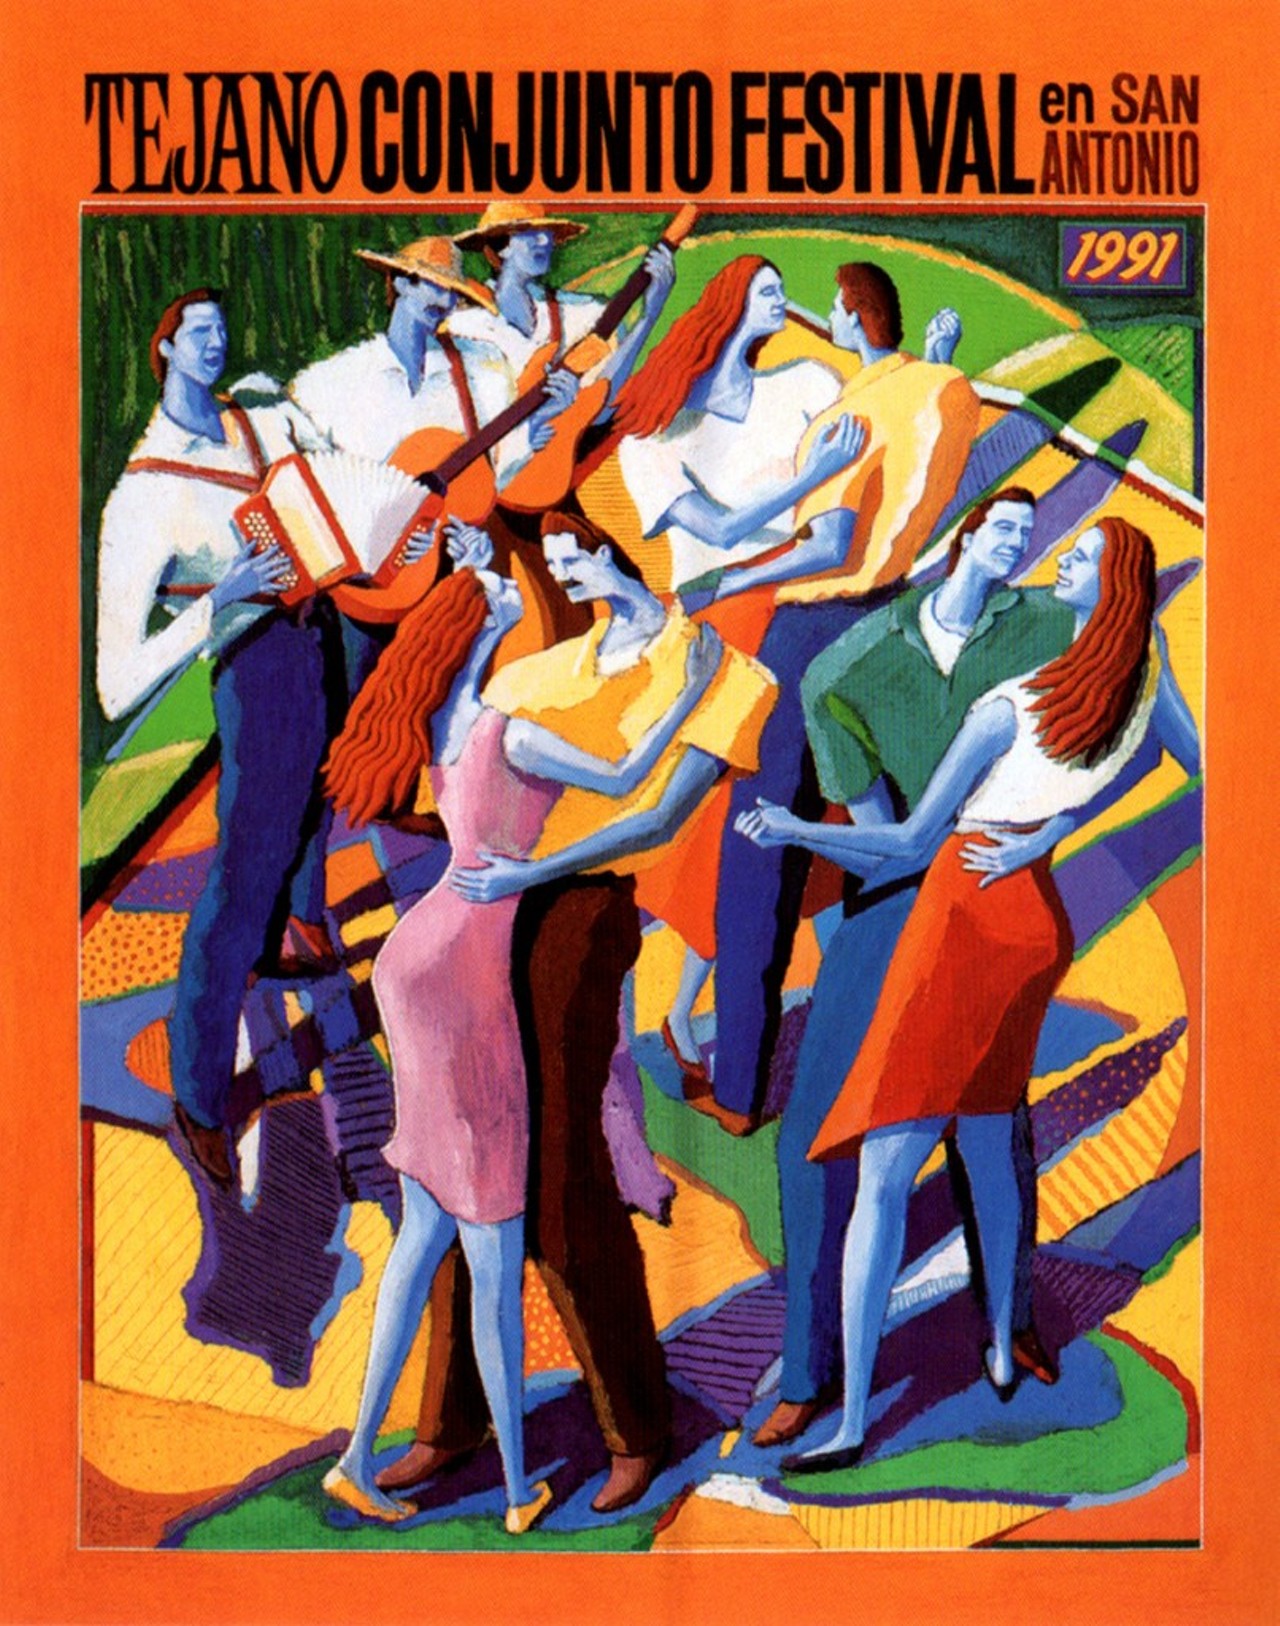 1991 Tejano Conjunto Festival poster by Roger Garcia